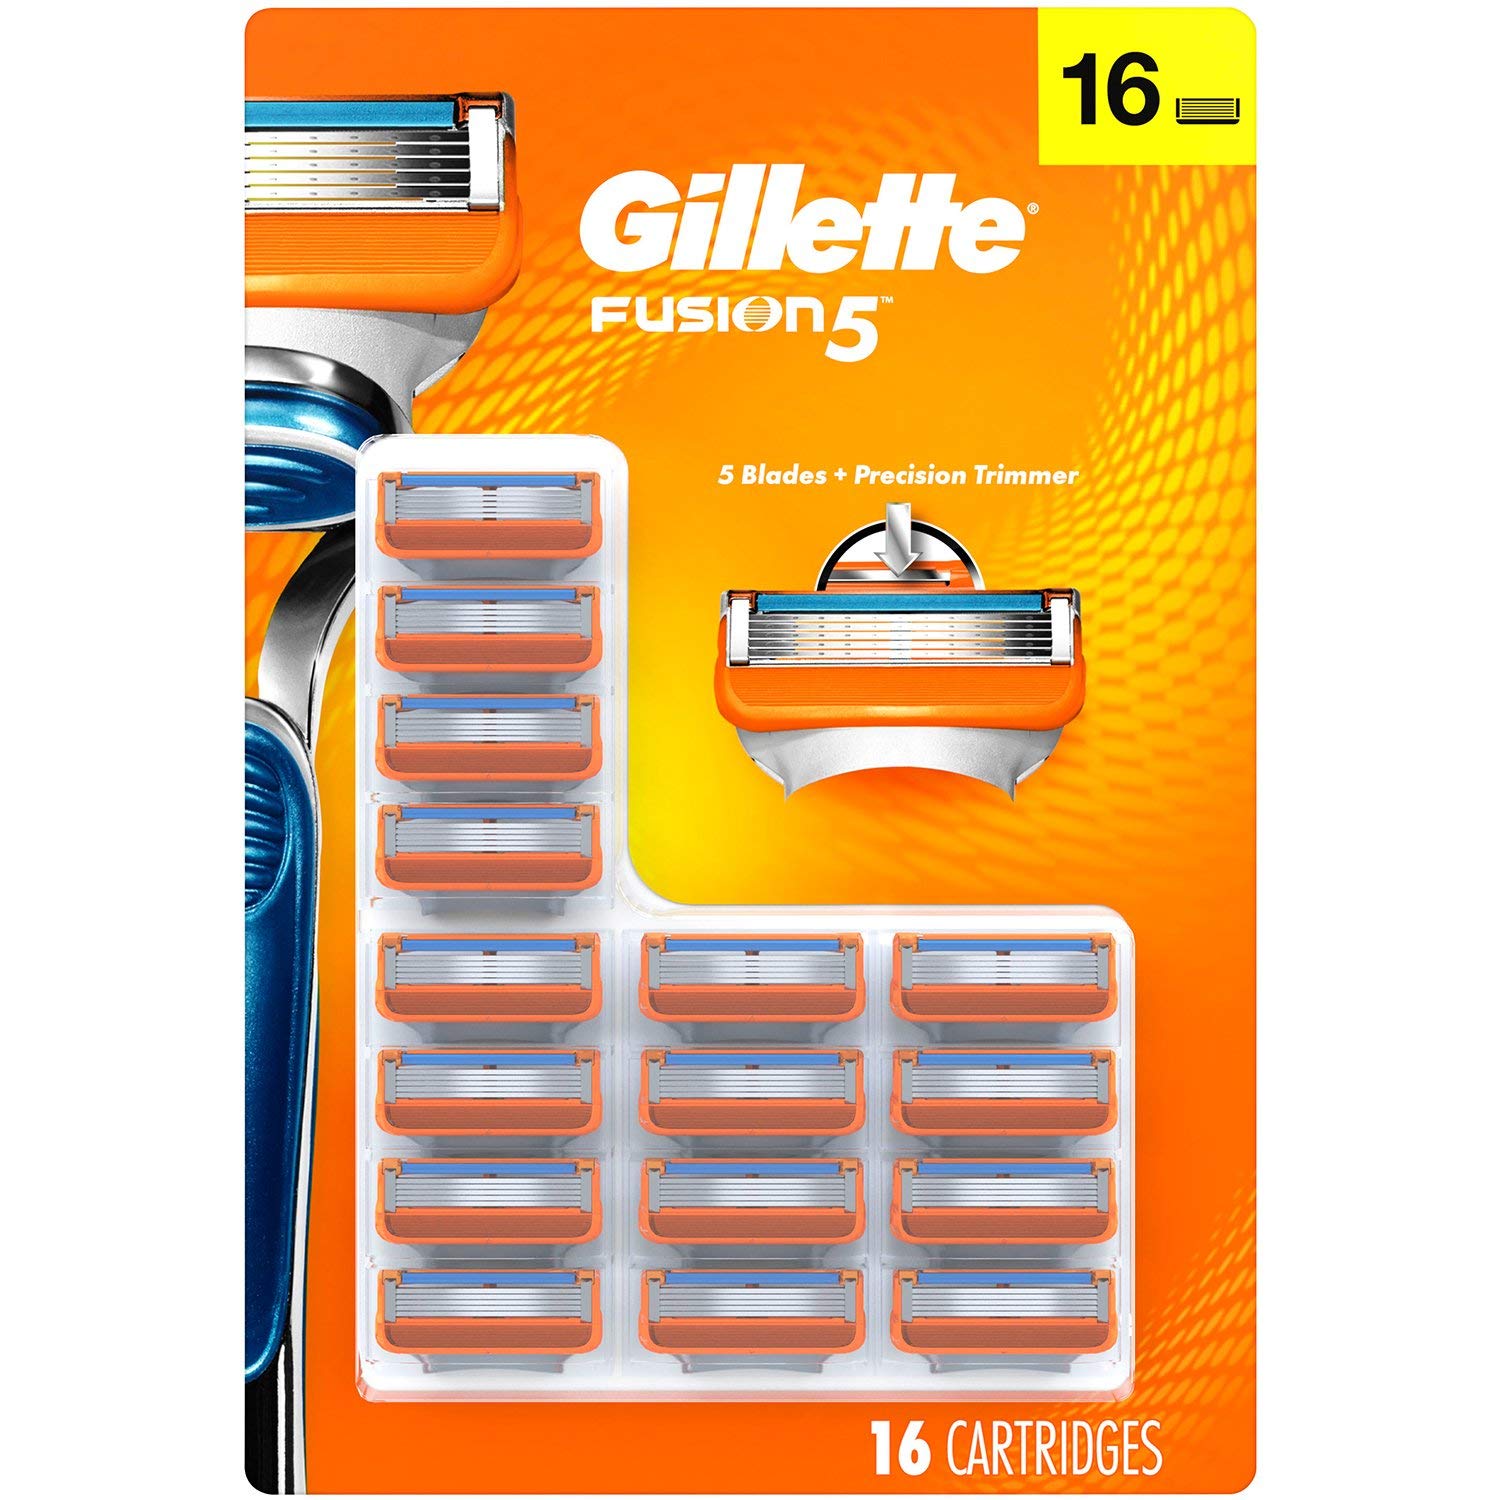 Gillette Fusion5 Mens Razor Blades 16 Cartridge Refills